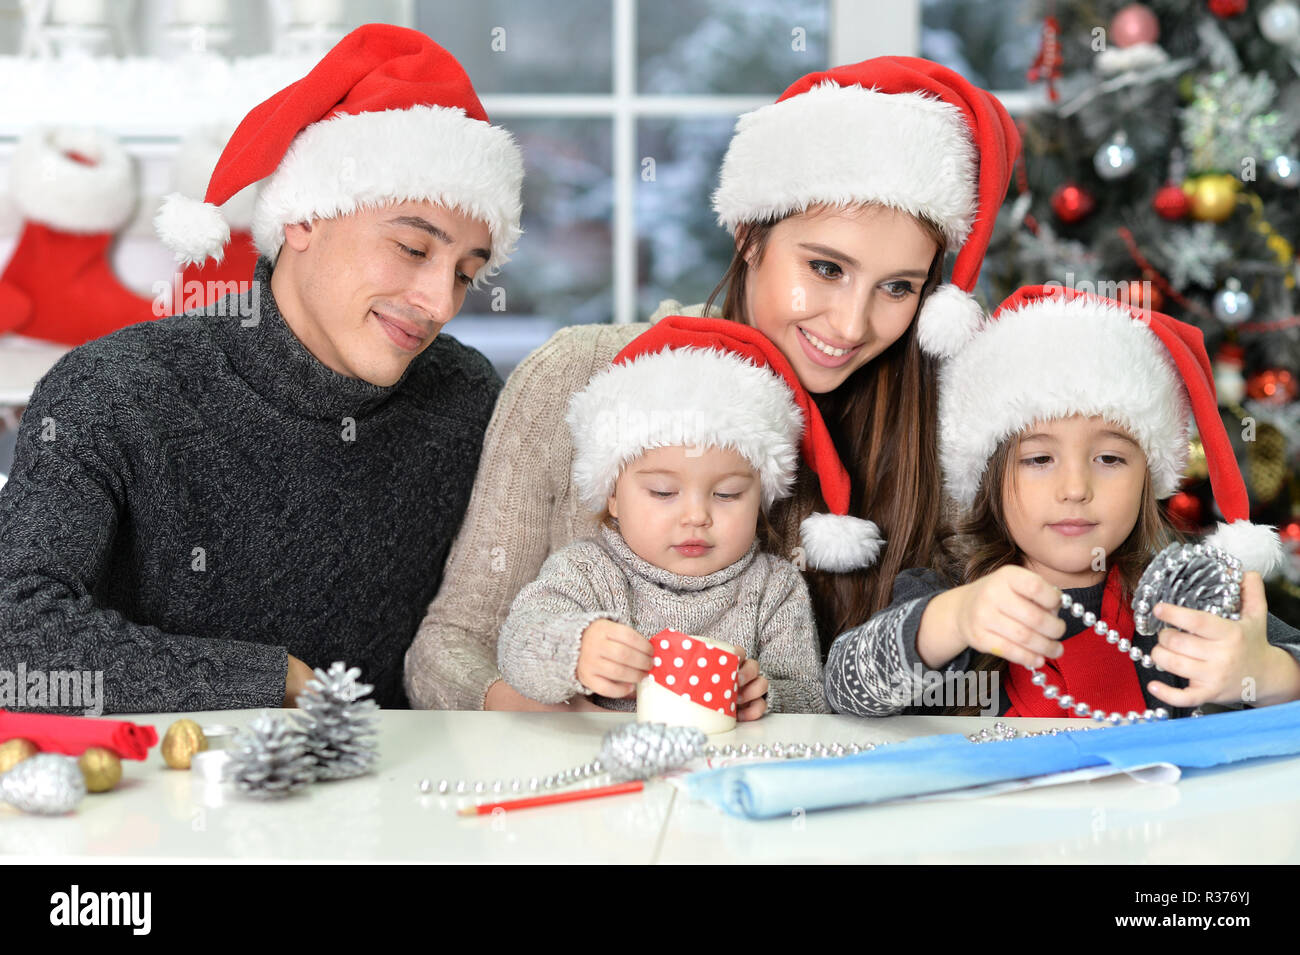 Happy family in Santa hats preparing for Christmas Stock Photo